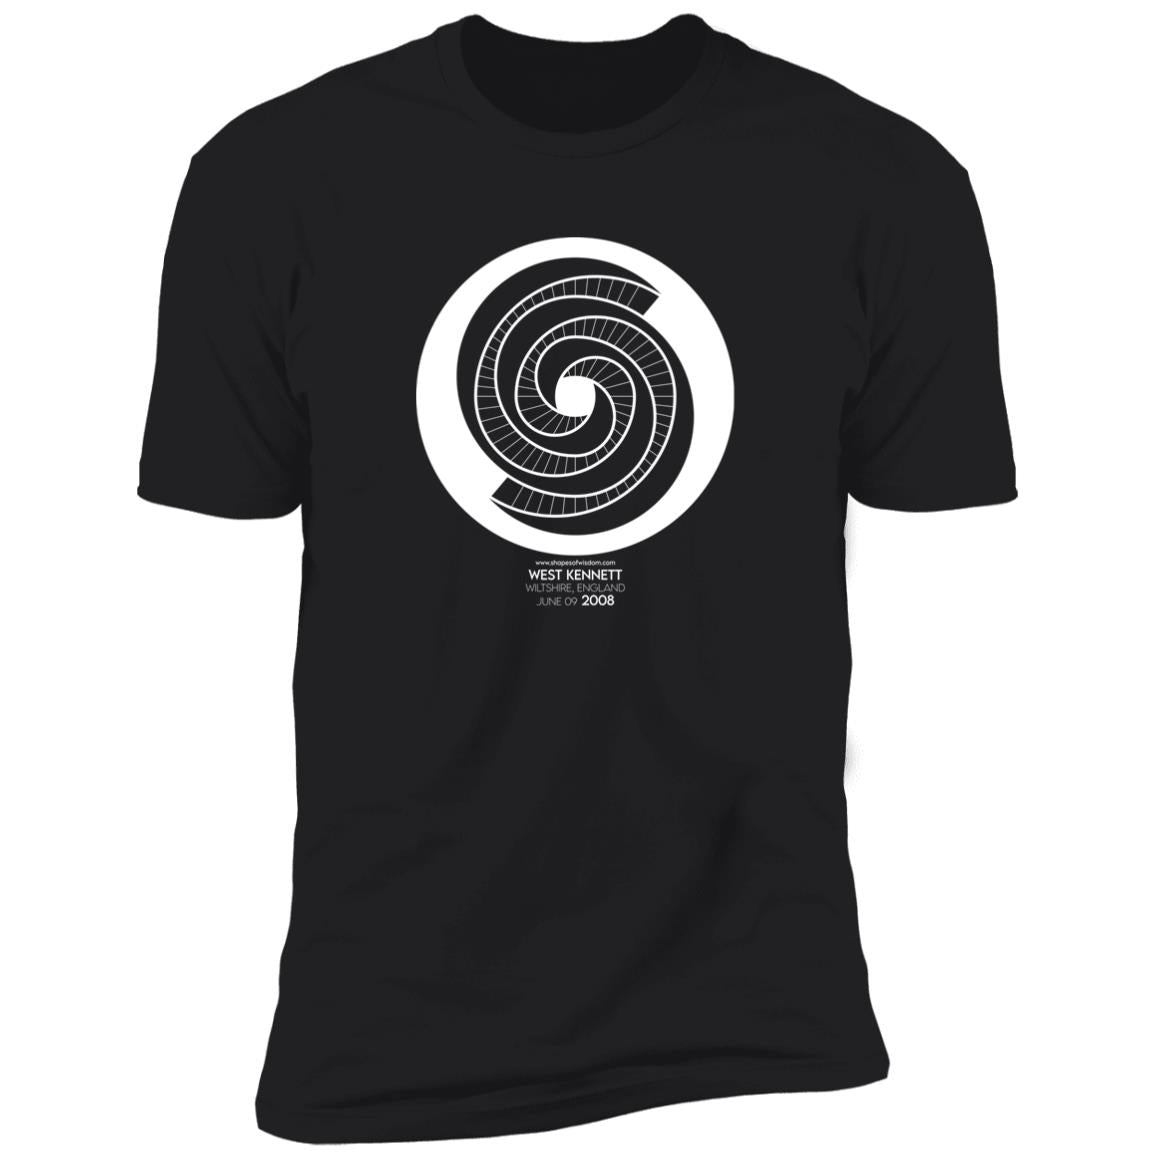 Crop Circle Premium T-Shirt - West Kennett 8